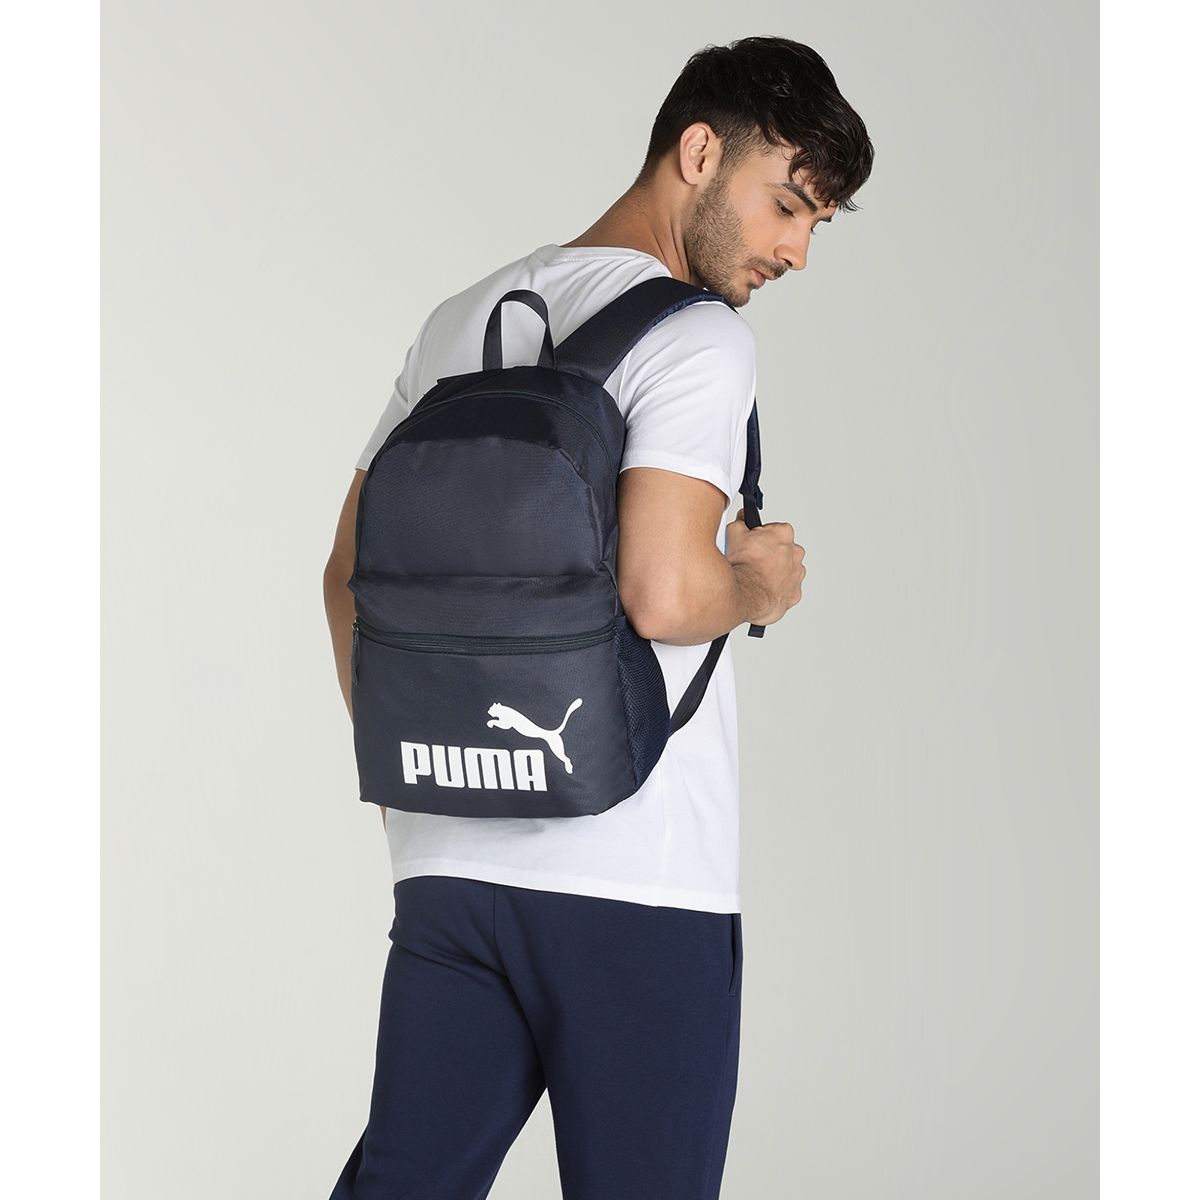 Puma School Backpack II Buy Puma School Backpack II Online at Best Price  in India  Nykaa